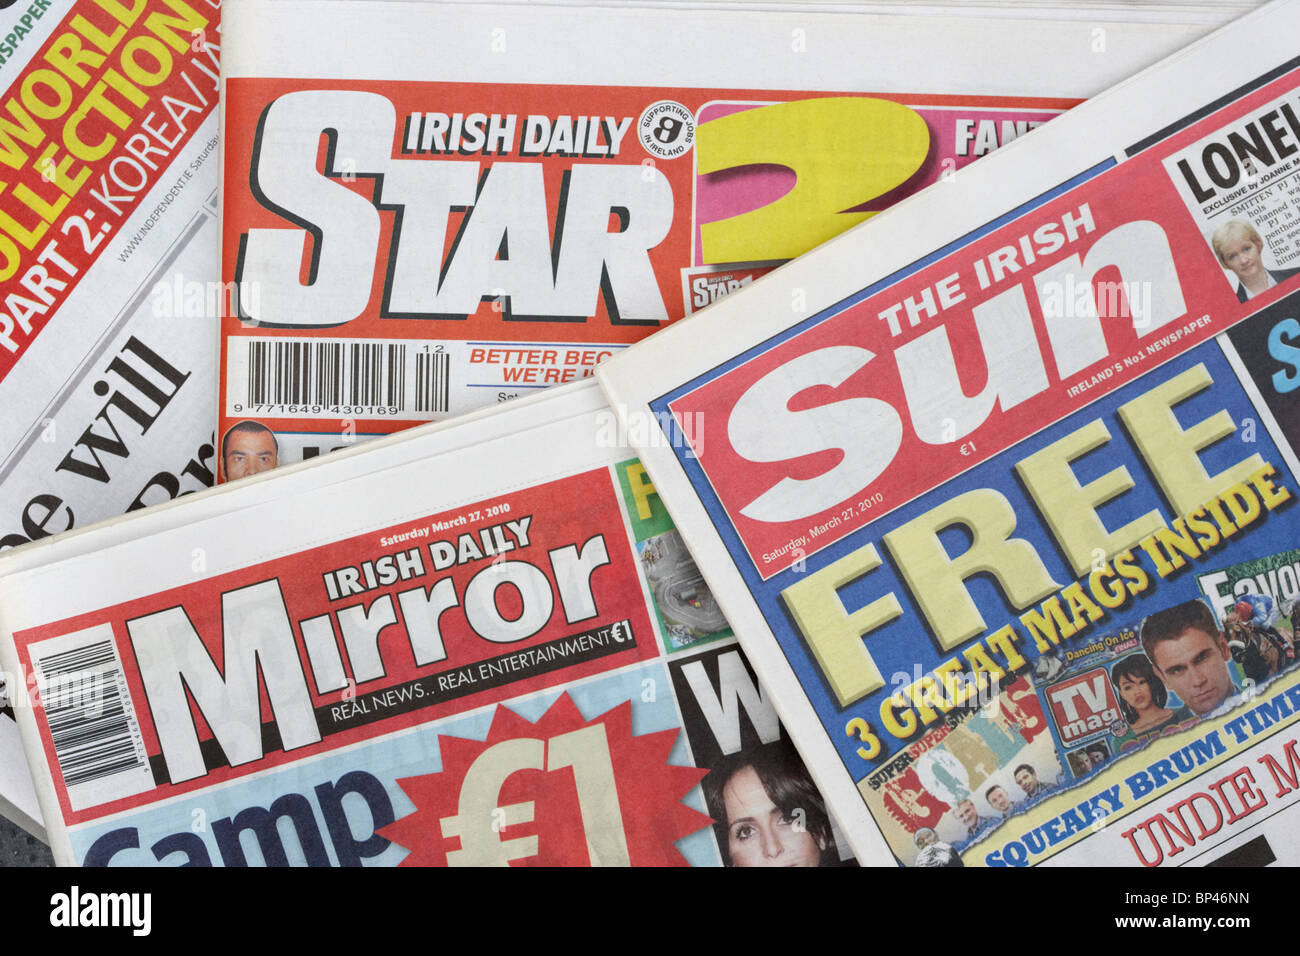 republic of ireland versions of british tabloid newspapers including the irish daily star the irish sun and irish daily mirror Stock Photo